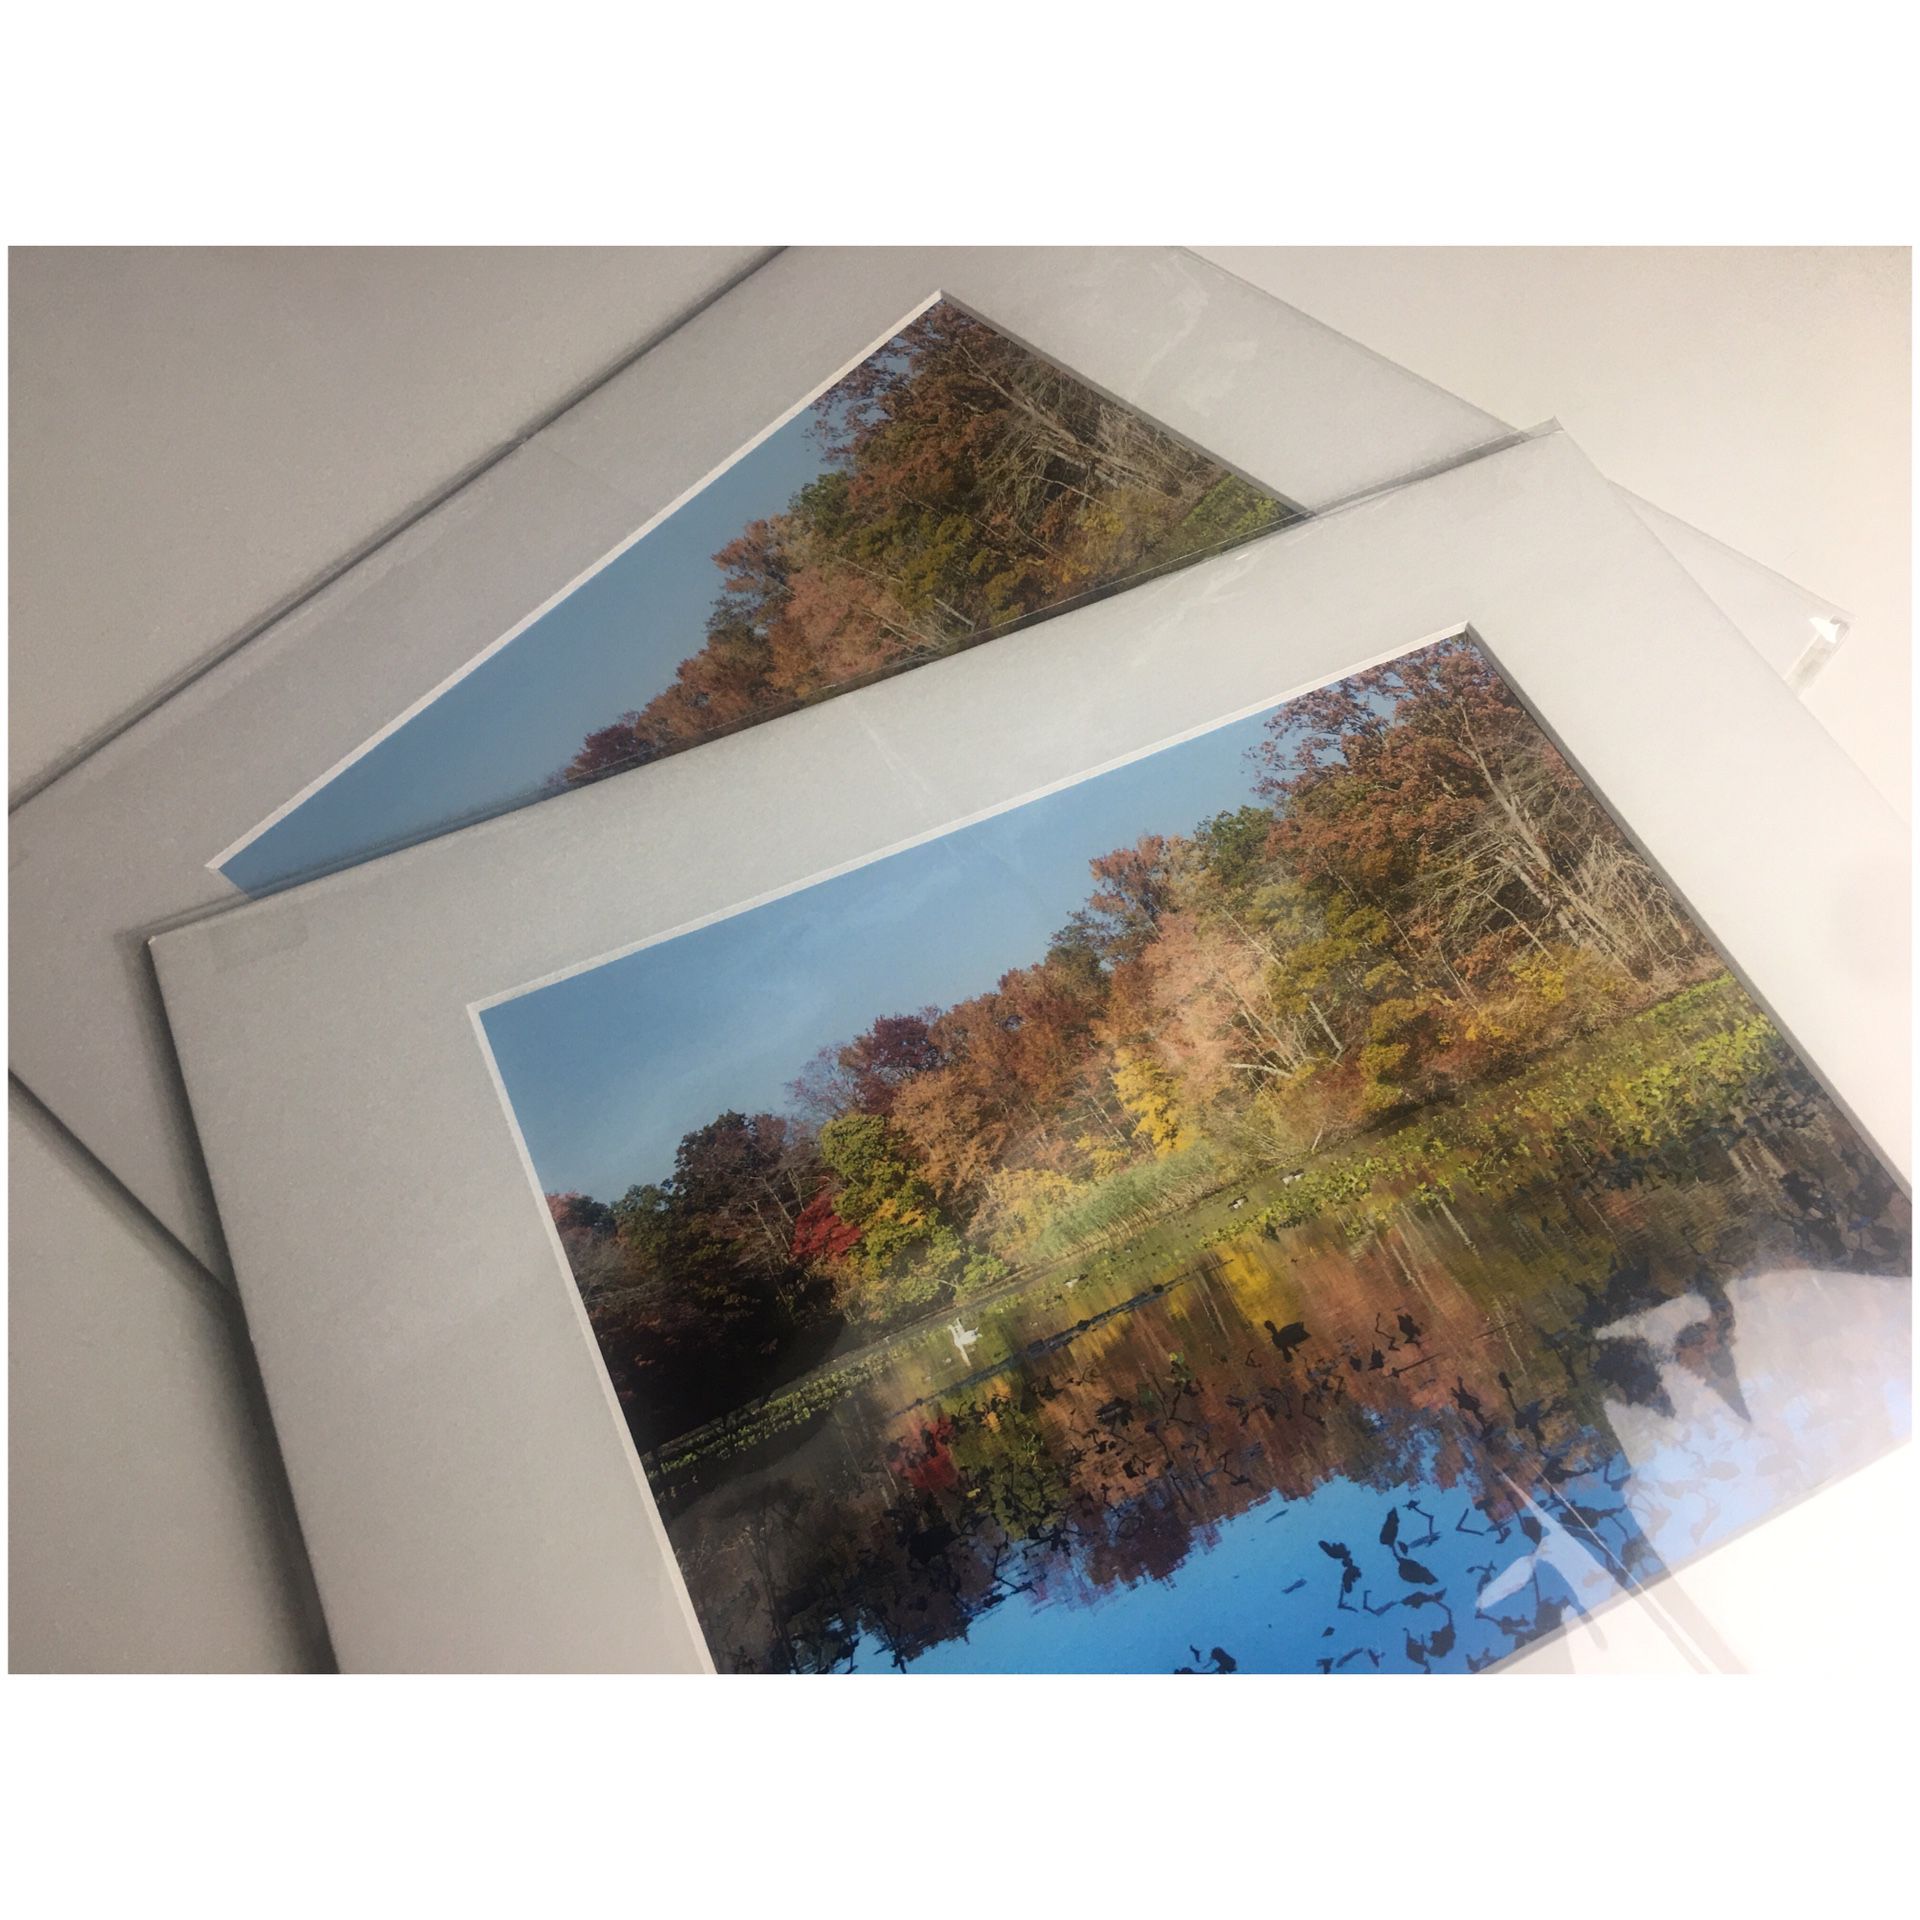 A Pond in Autumn: 2 8x10 High Resolution Fine Art Prints